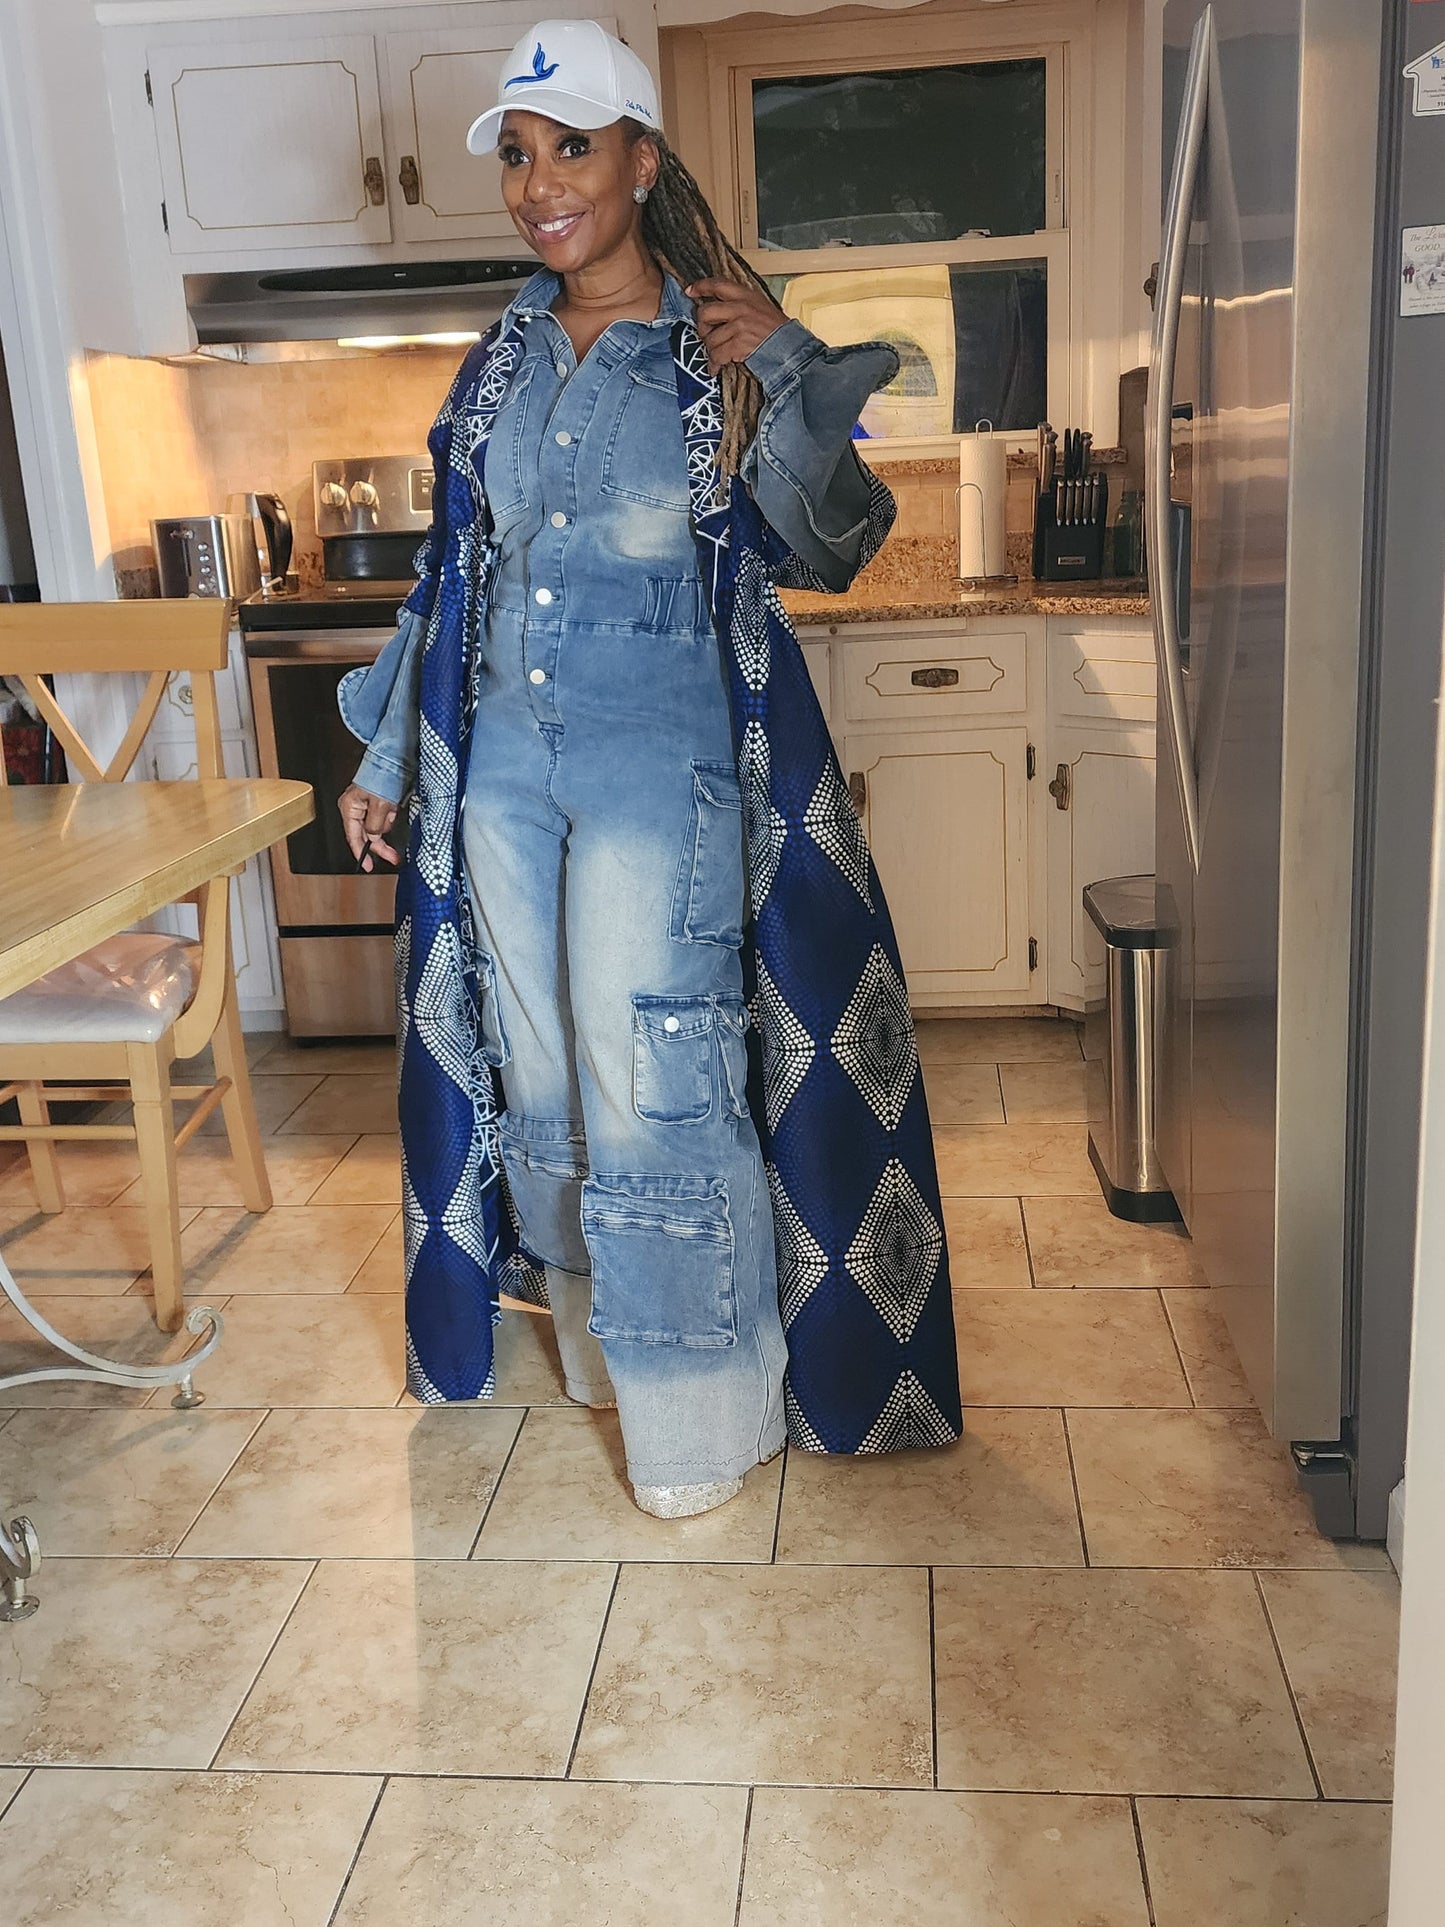 The Finer Harusi Kimono | Full-Length African Print Kimono | African Dresses  Zeta Phi Beta  | Black Royal Blue and White Kimono